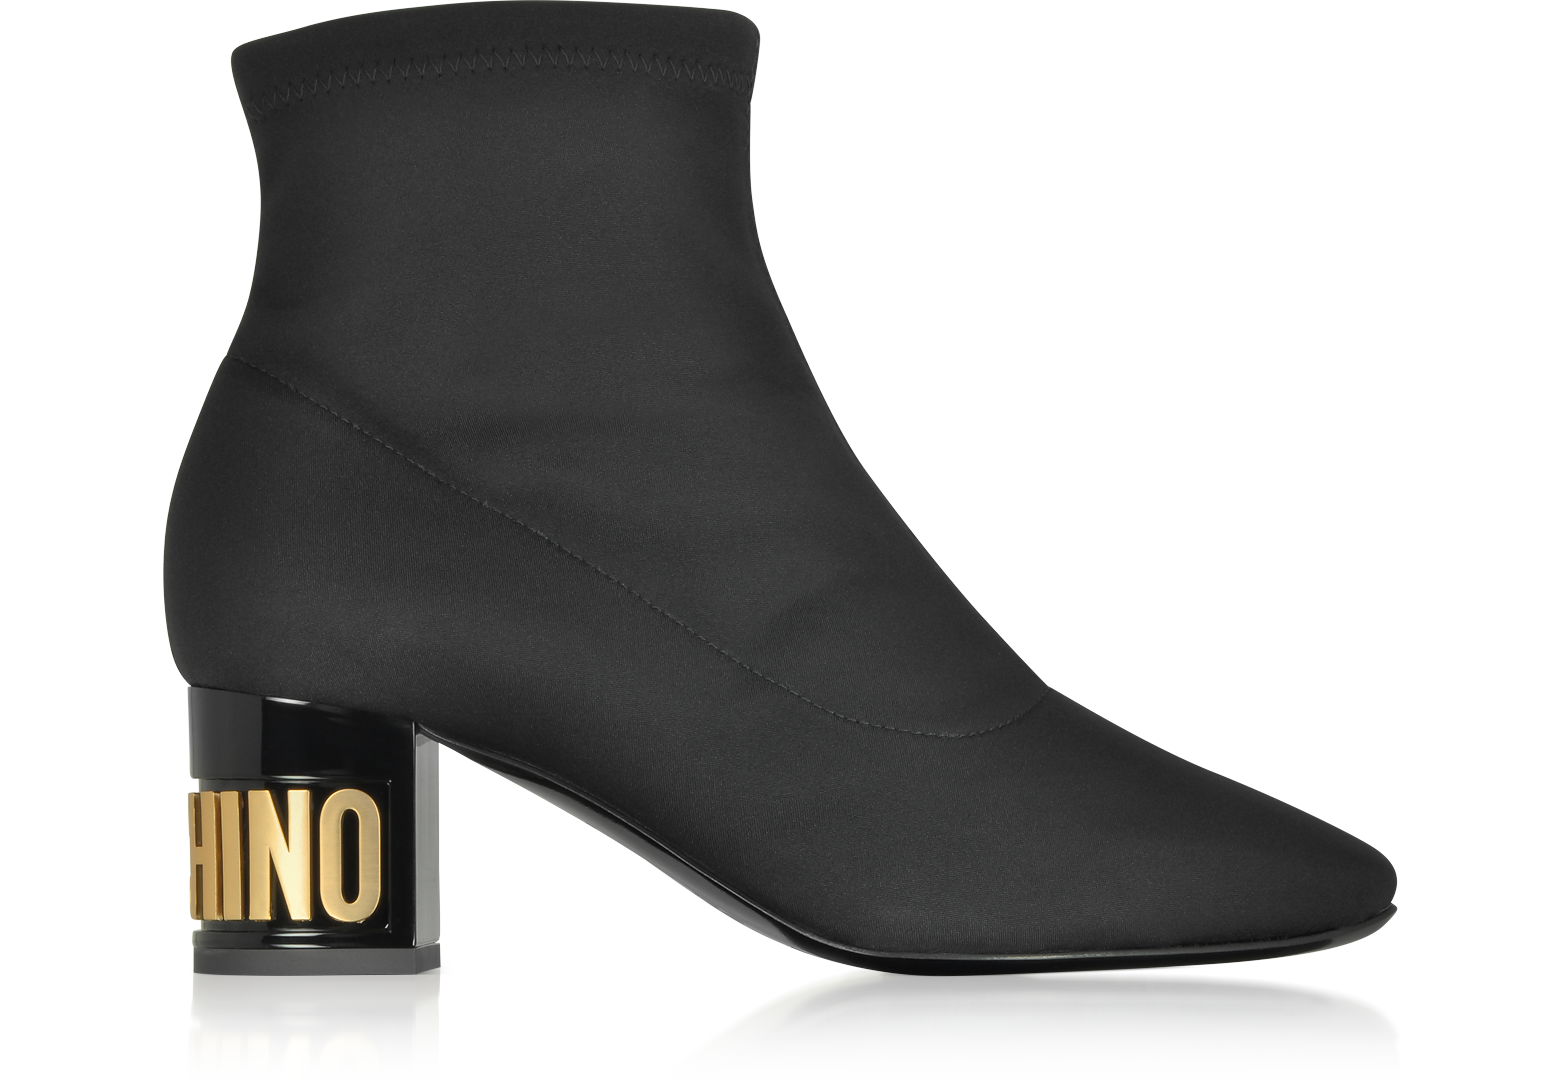 moschino black boots